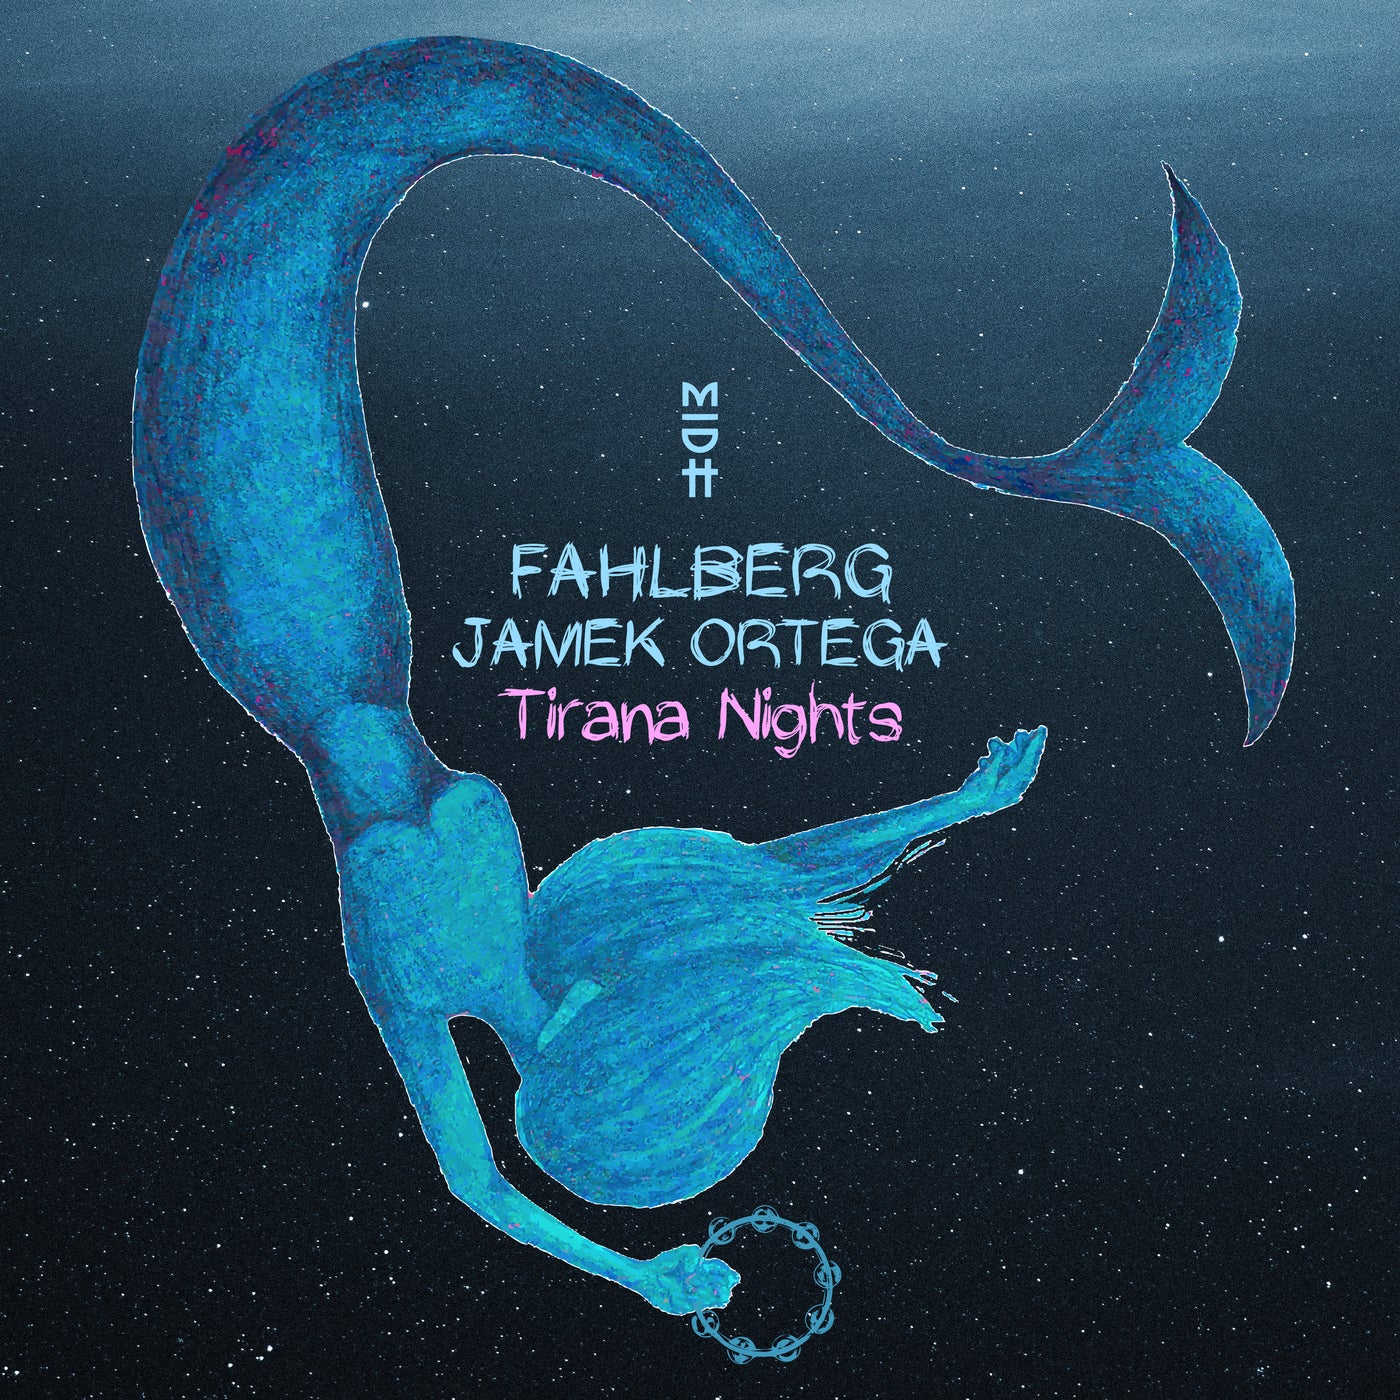 image cover: Fahlberg, Jamek Ortega - Tirana Nights on Madorasindahouse Records